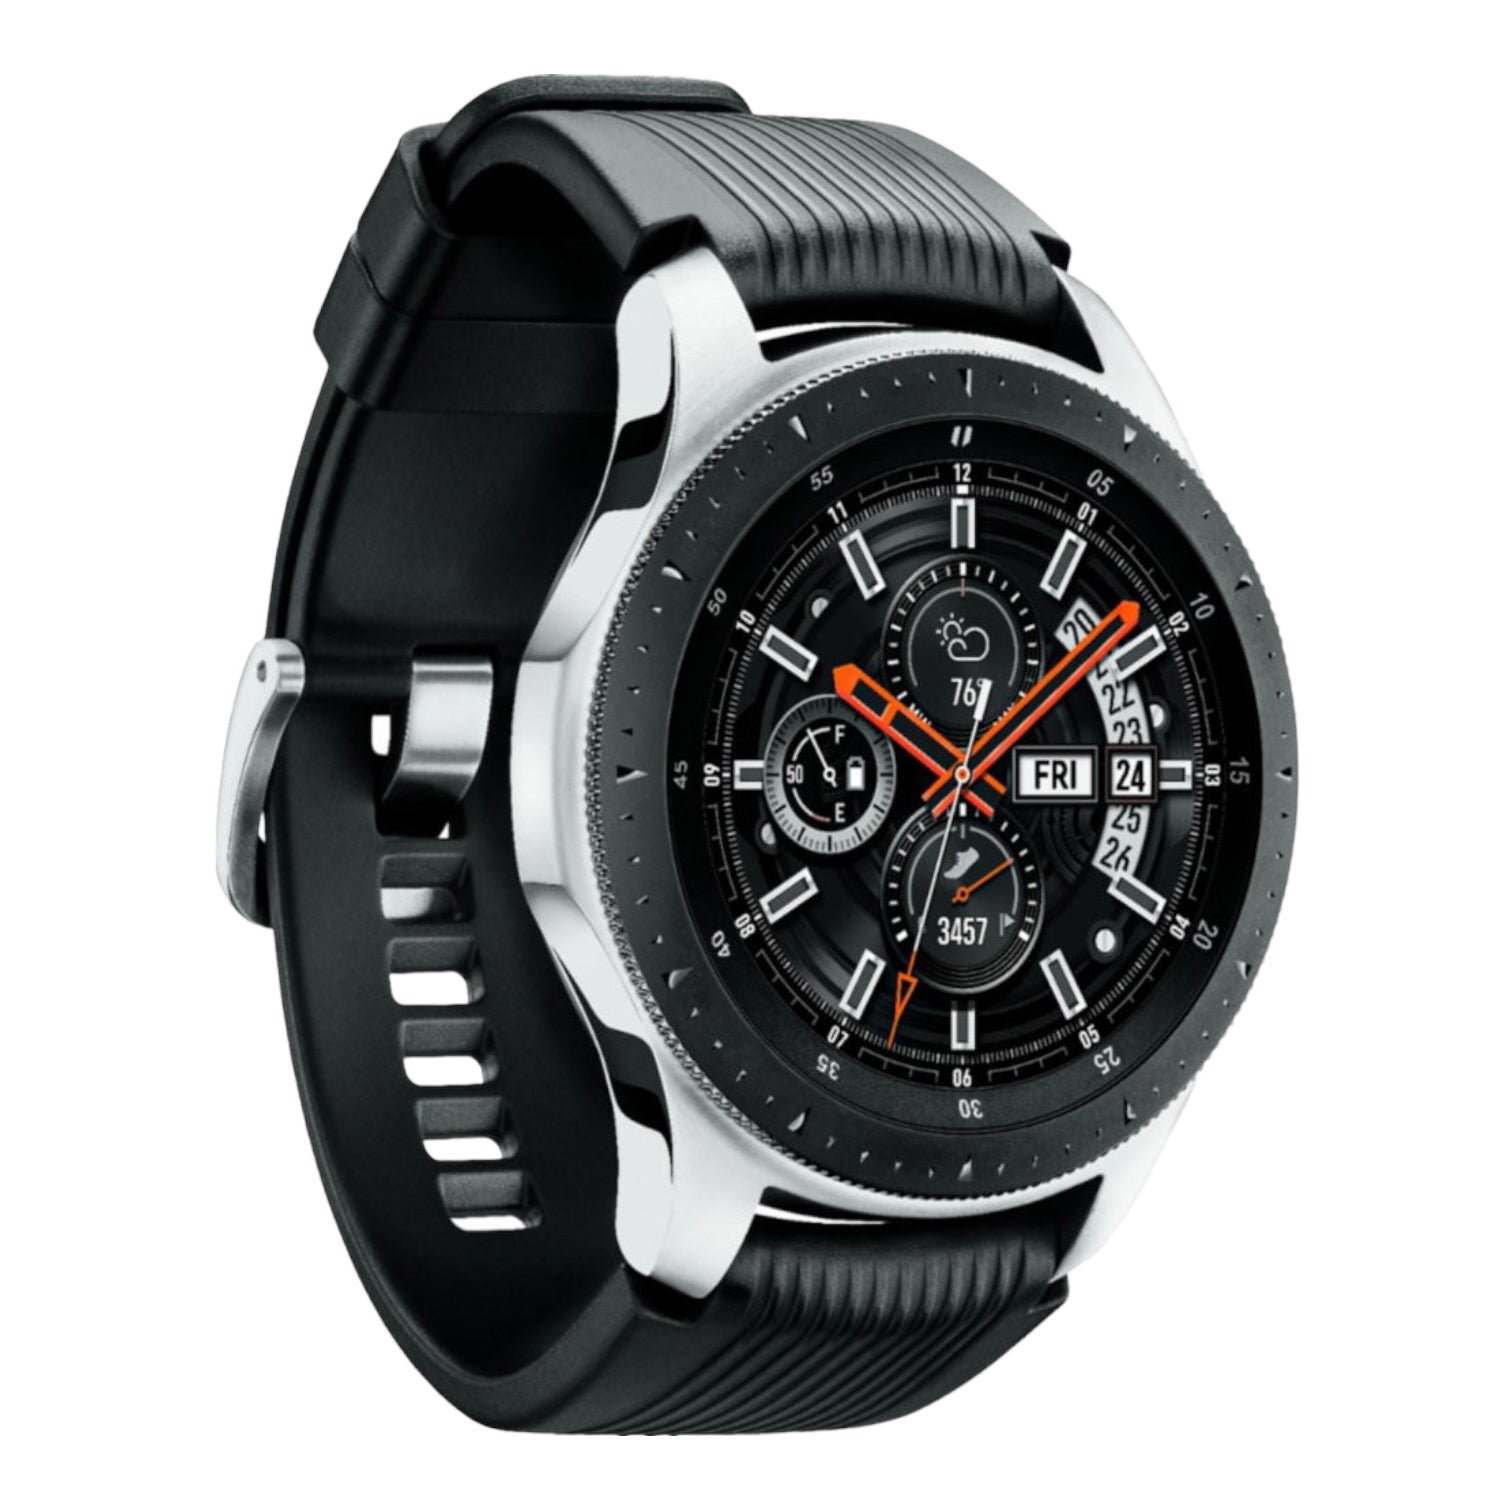 Samsung Galaxy Watch 46mm - Watch Straps NZ, Watch Bands & Chargers (SM-R800)